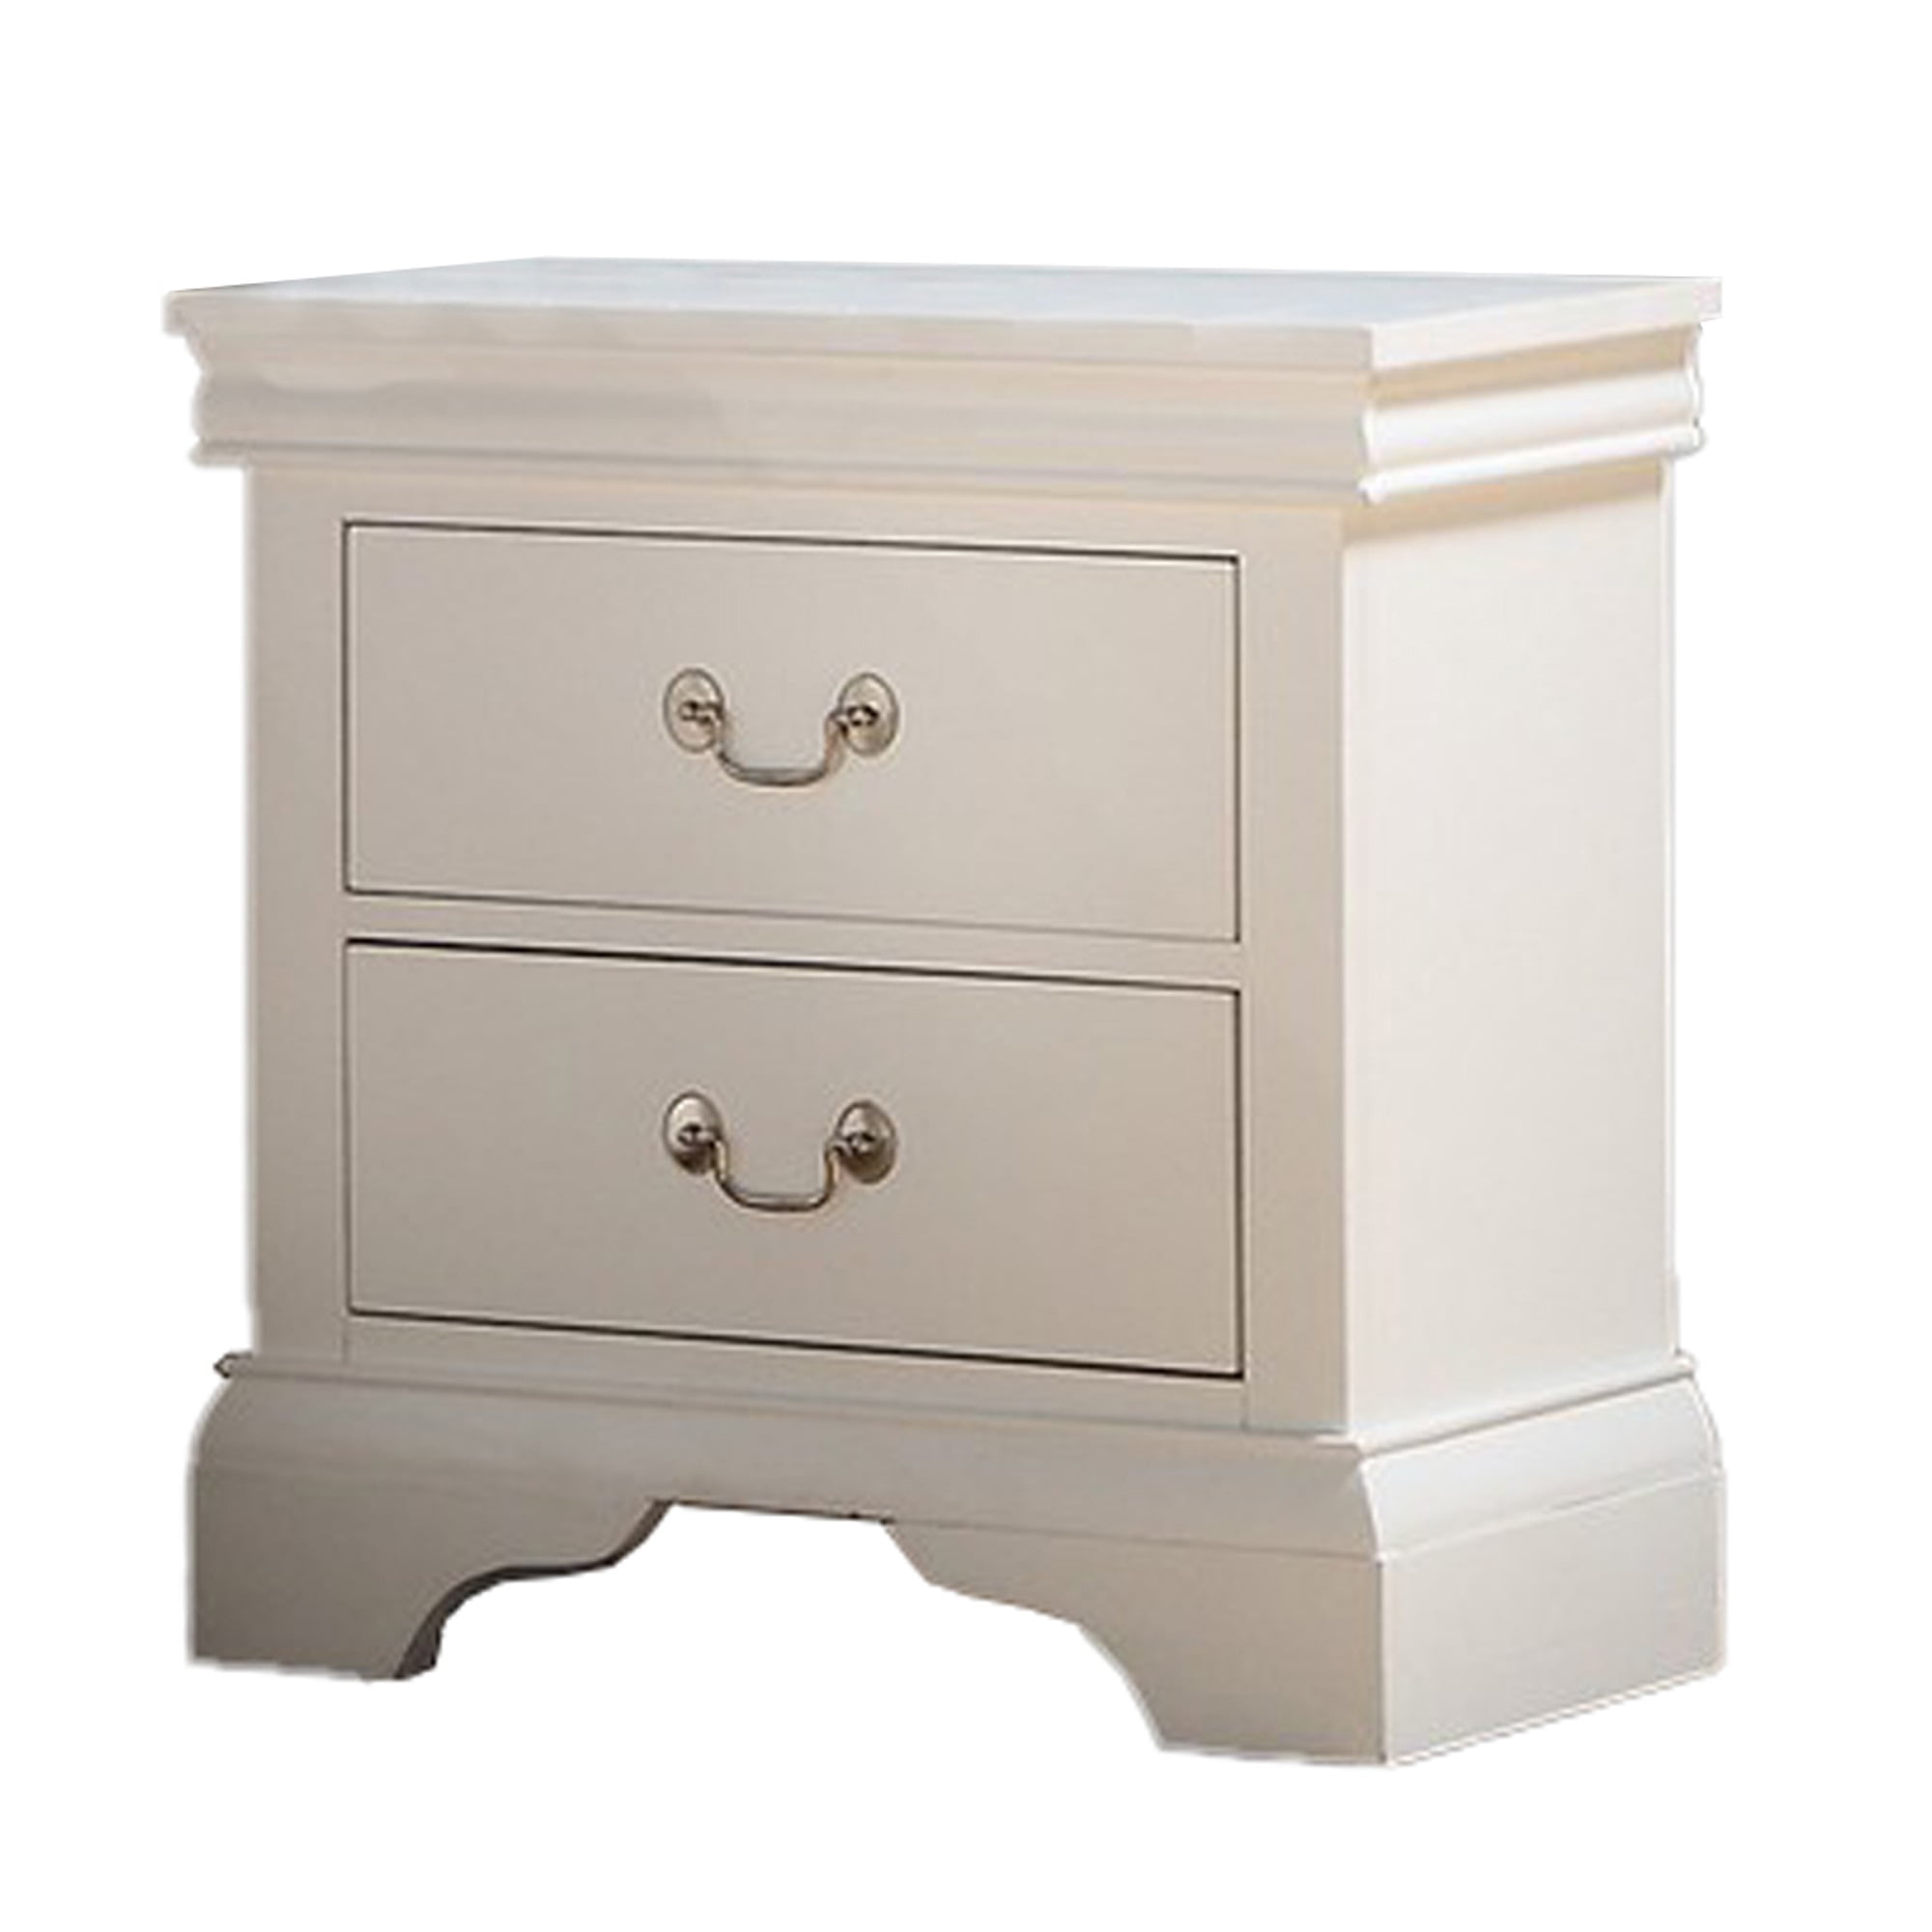 2 Drawer Wooden Nightstand with Panel Bracket Feet, White